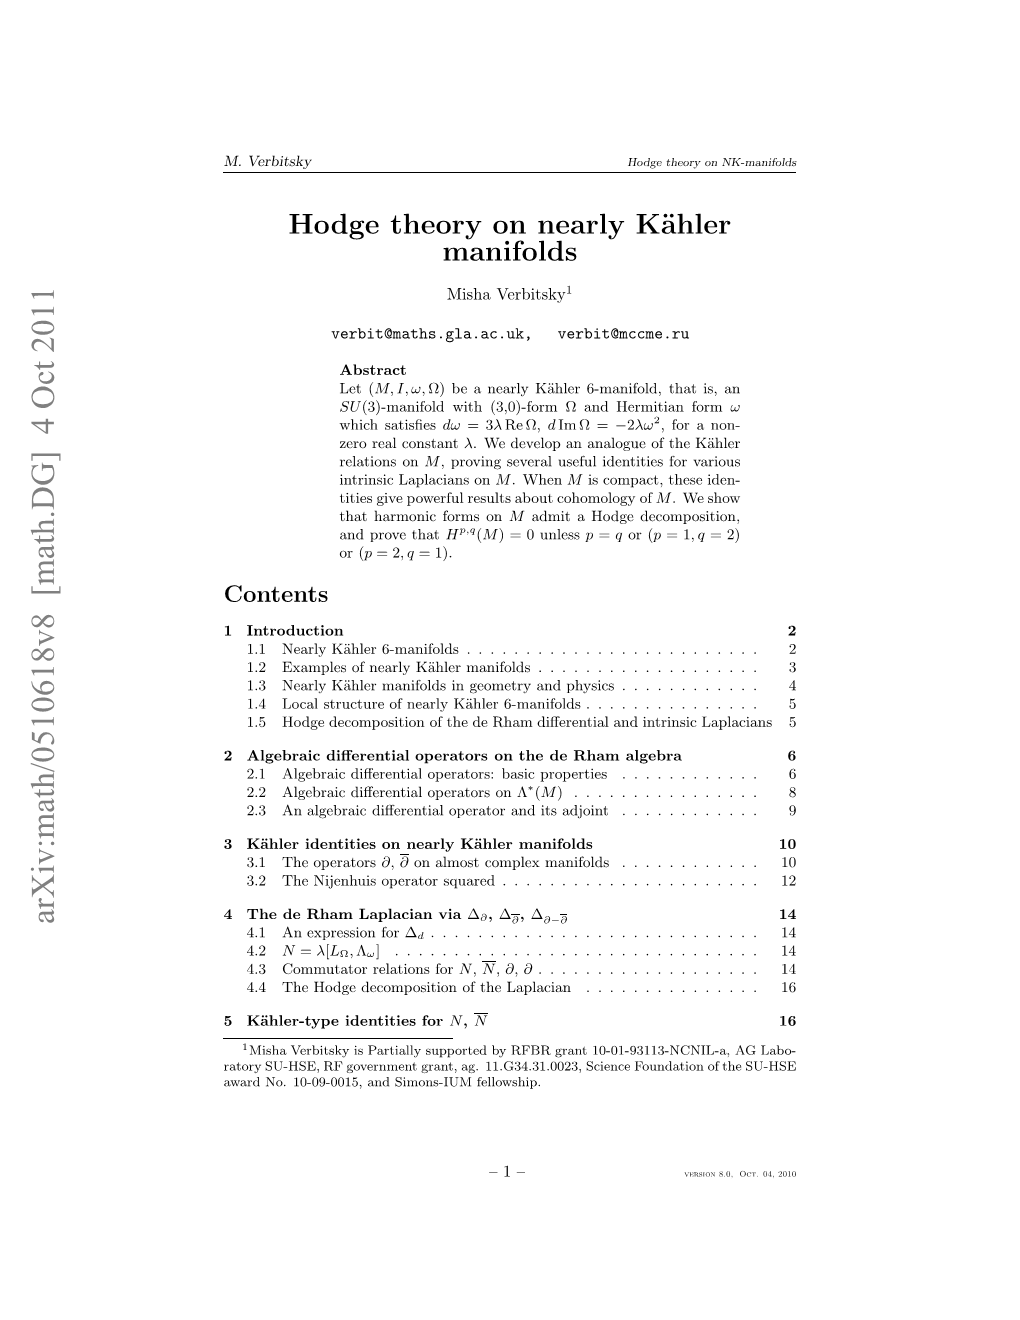 Hodge Theory on Nearly Kähler Manifolds